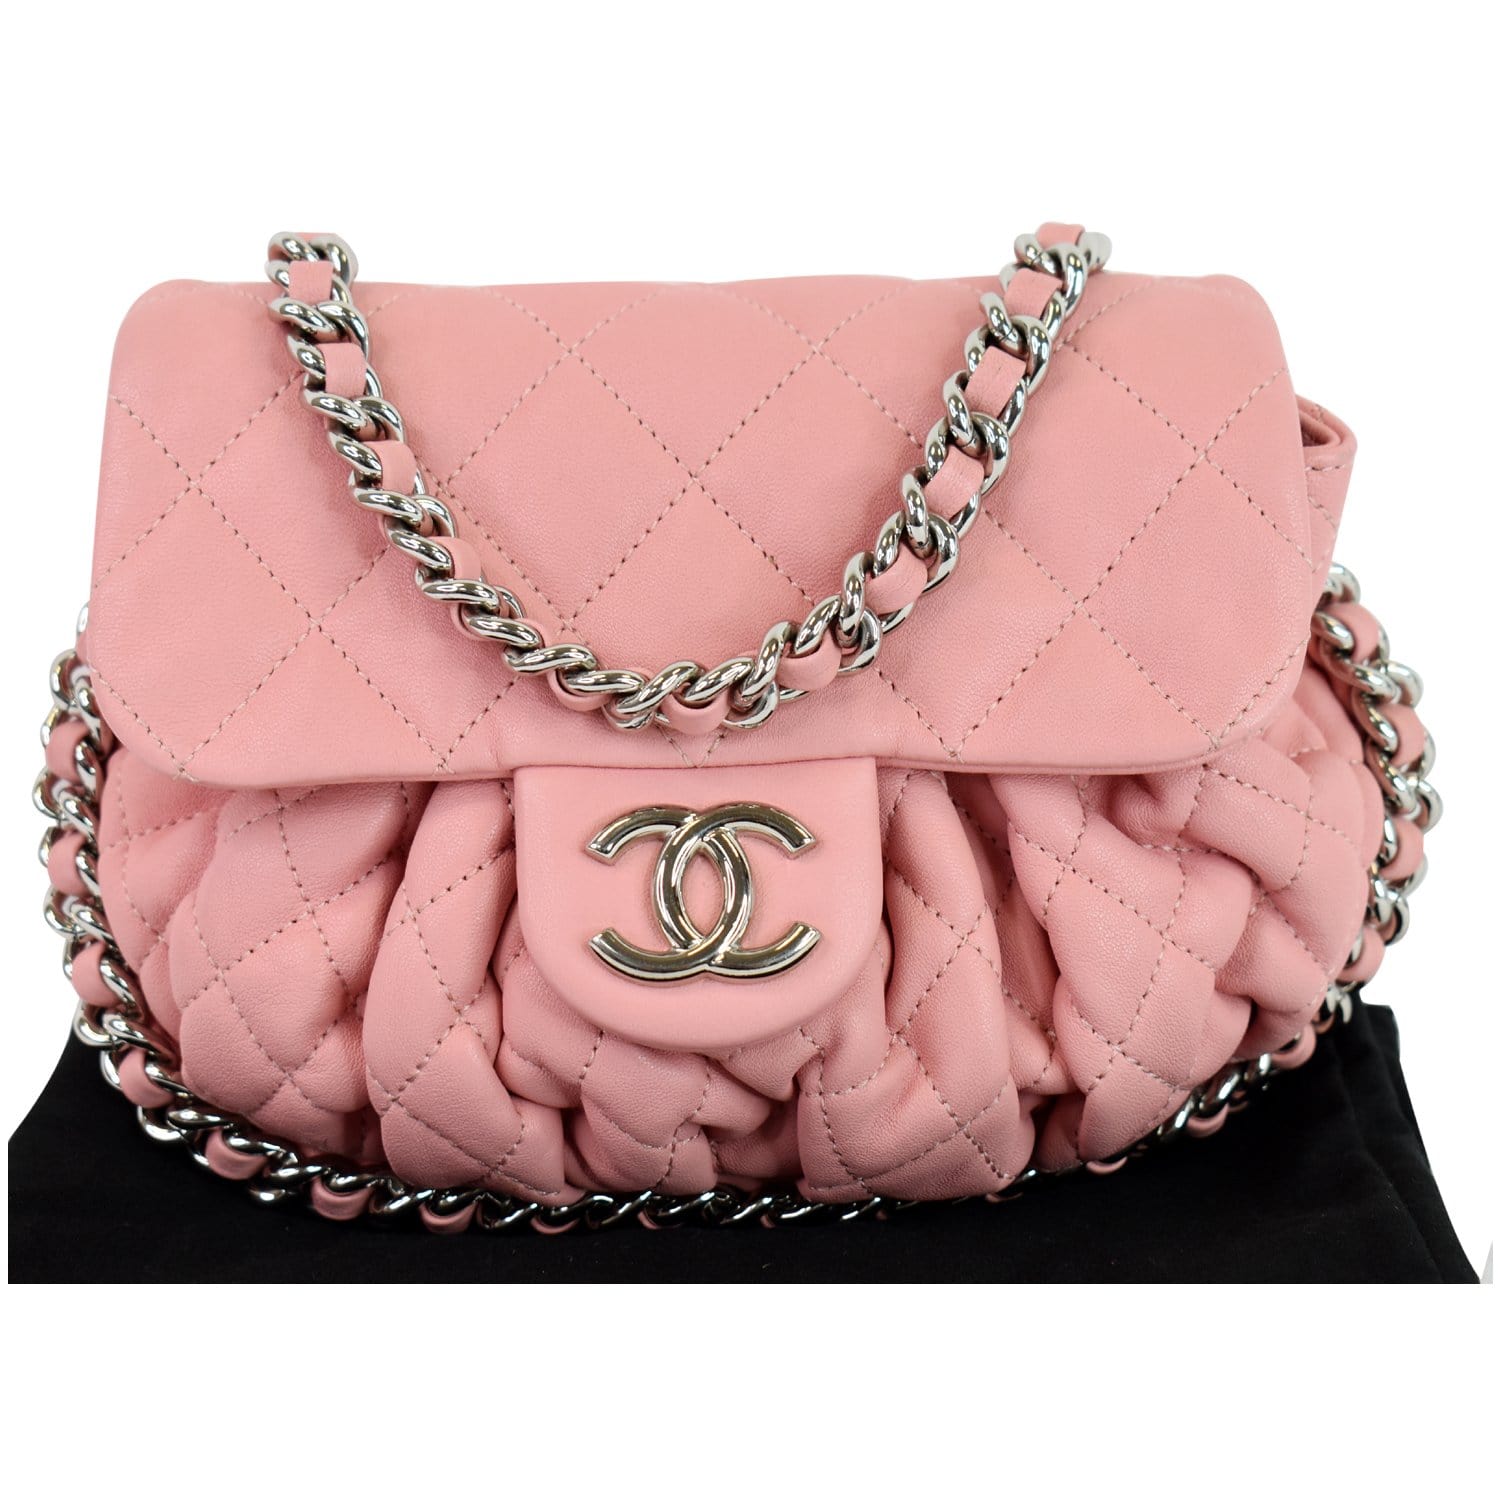 Chanel cross body bag. Want it!  Chanel cross body bag, Chanel handbags,  Chanel bag